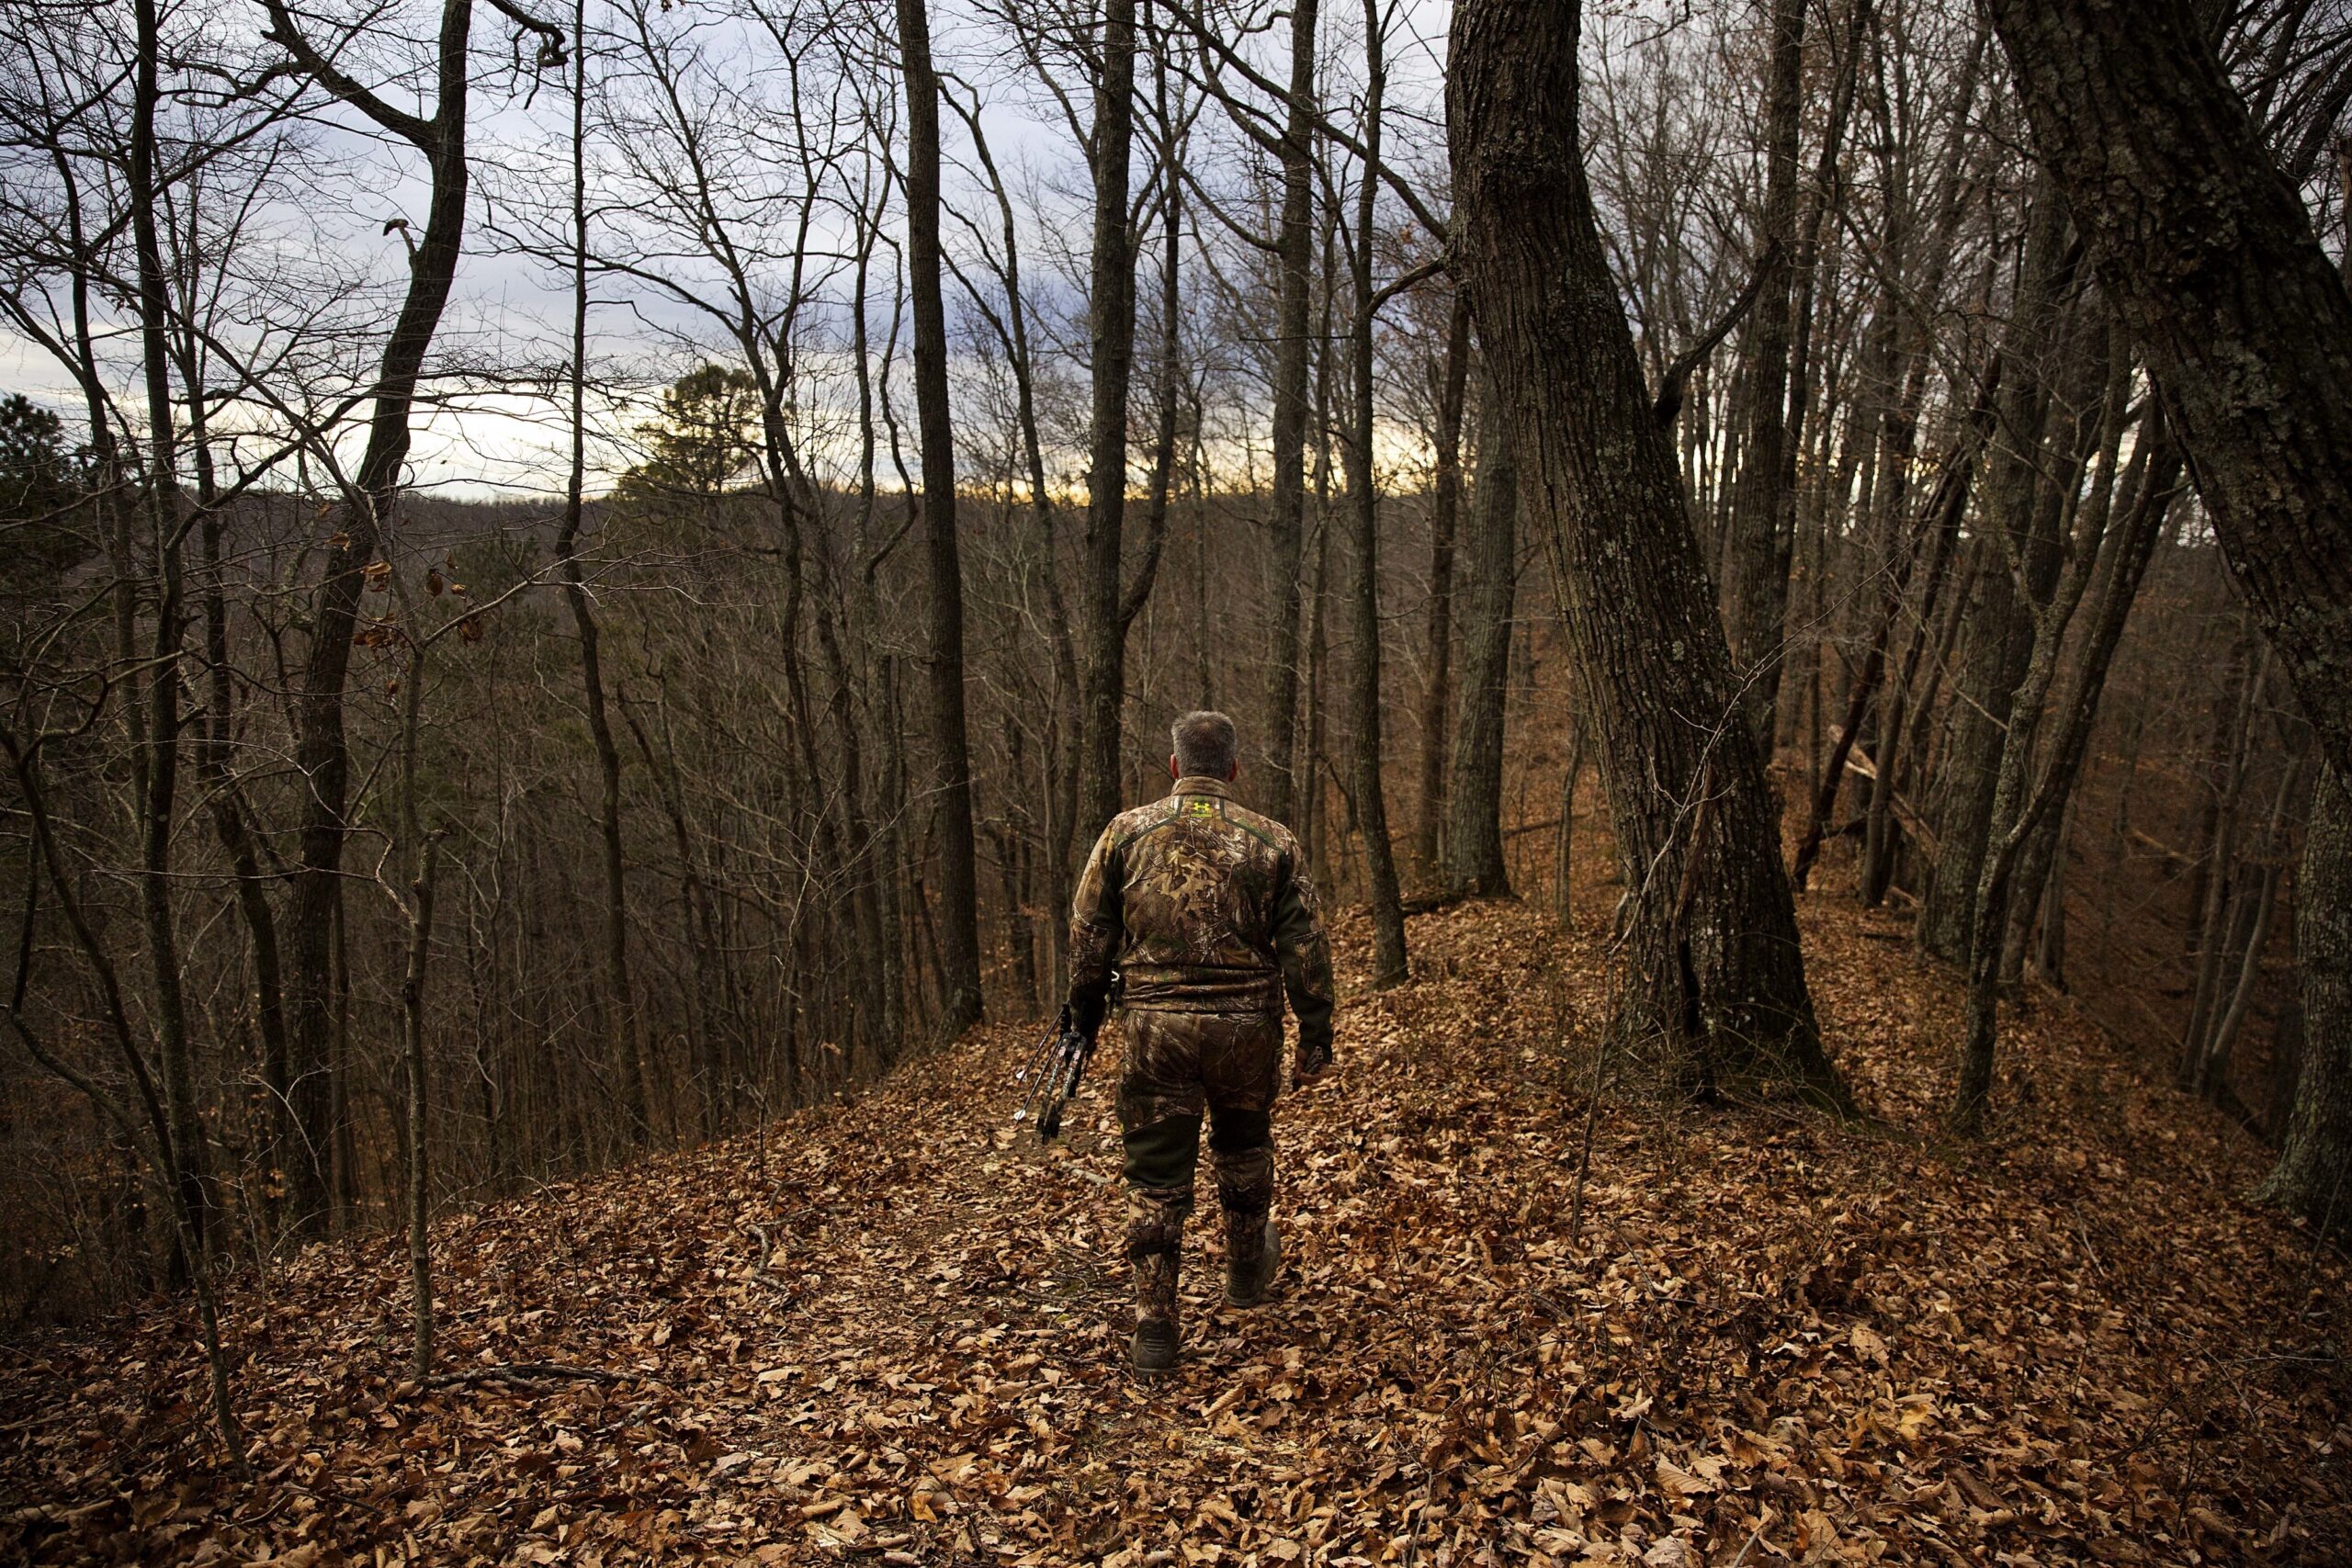 Hunter walking in the woods